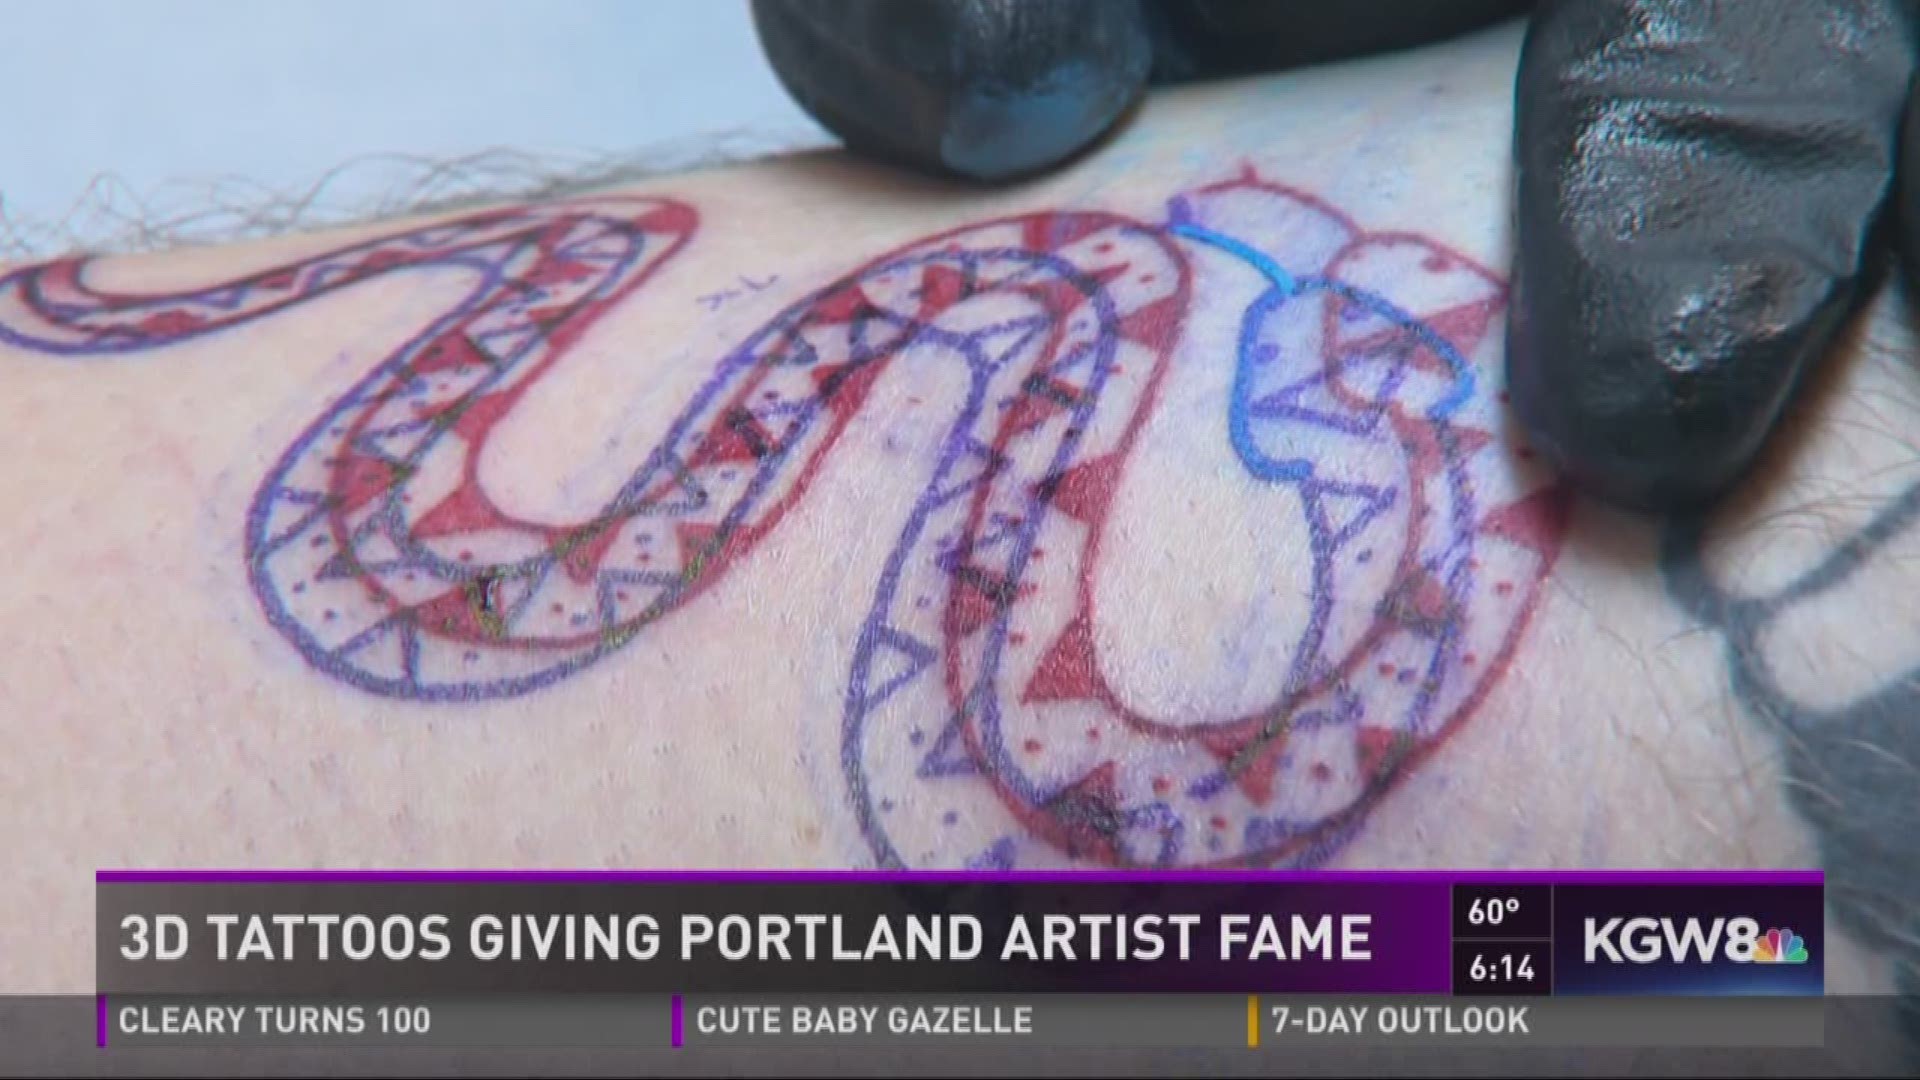 3D tattoos giving Portland artist fame